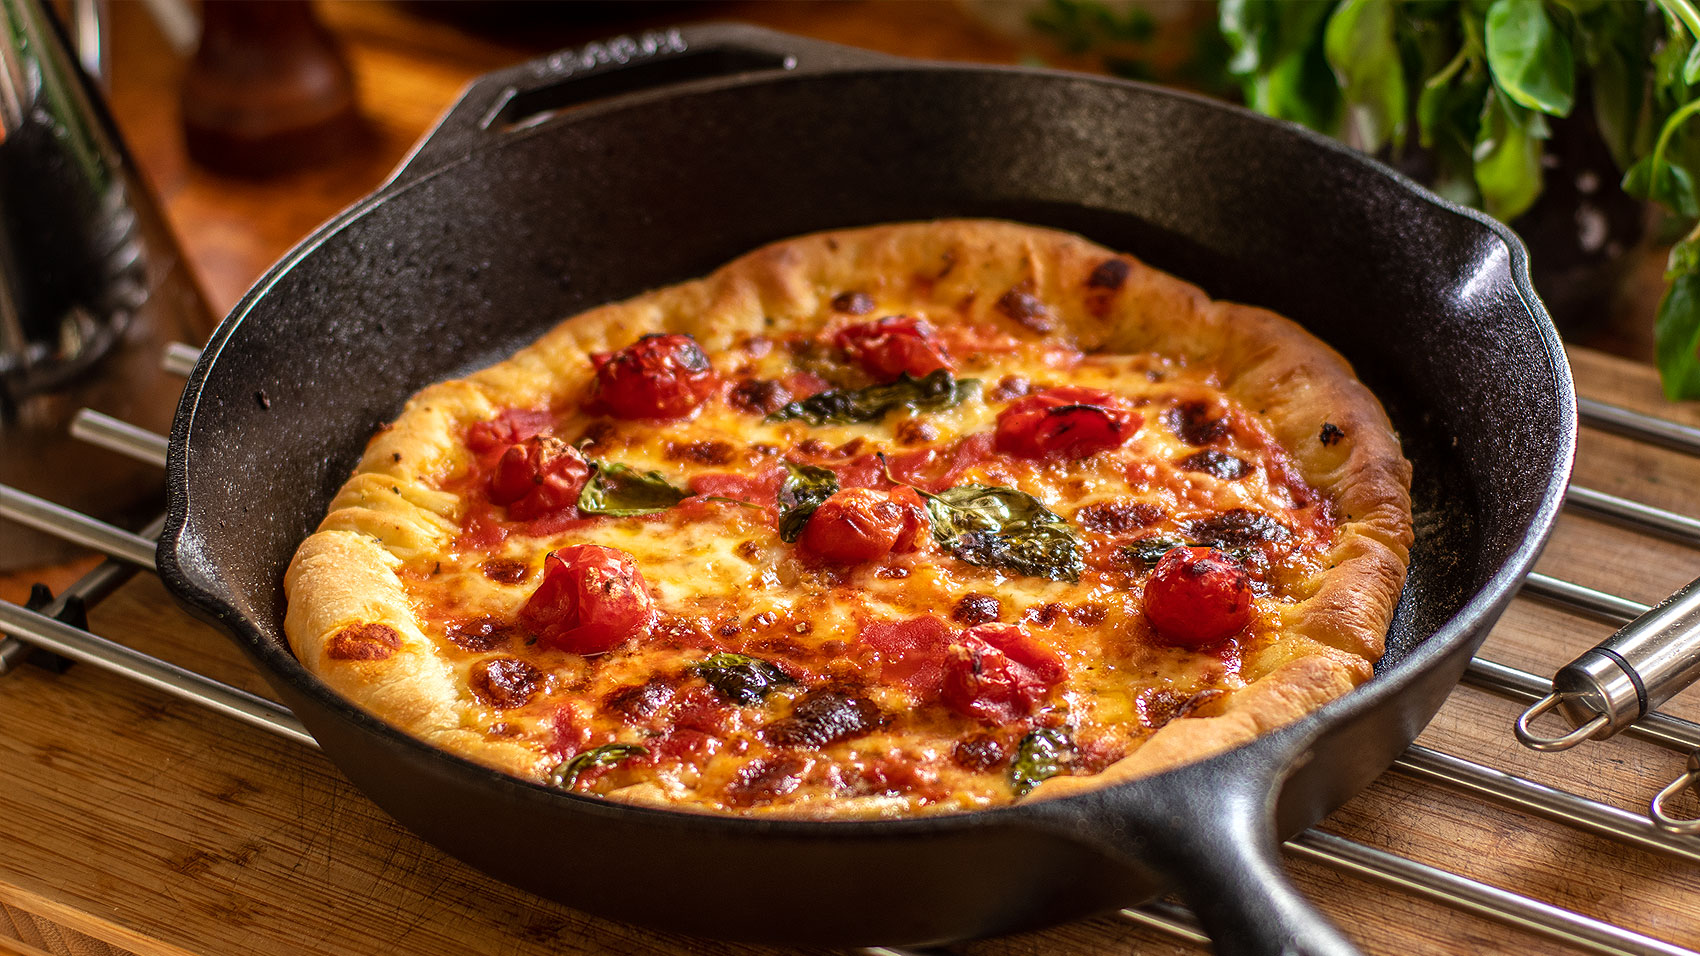 https://recipe30.com/wp-content/uploads/2019/03/pizza-margherita-homemade.jpg